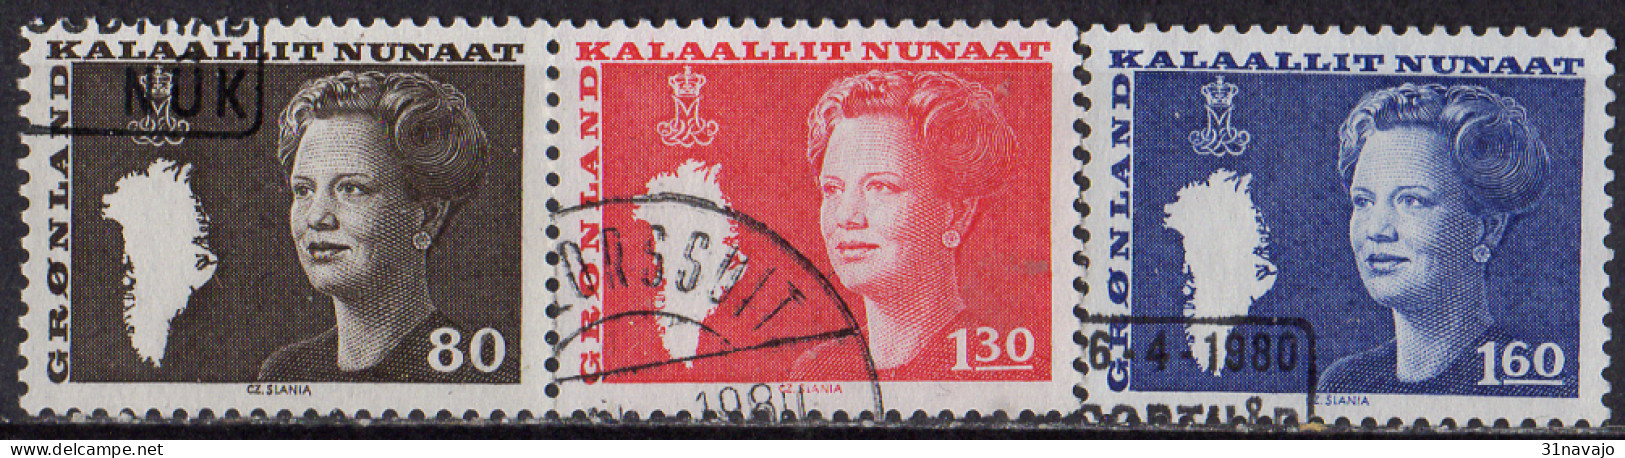 GROENLAND - Série Courante Reine Margrethe II 1980 - Oblitérés